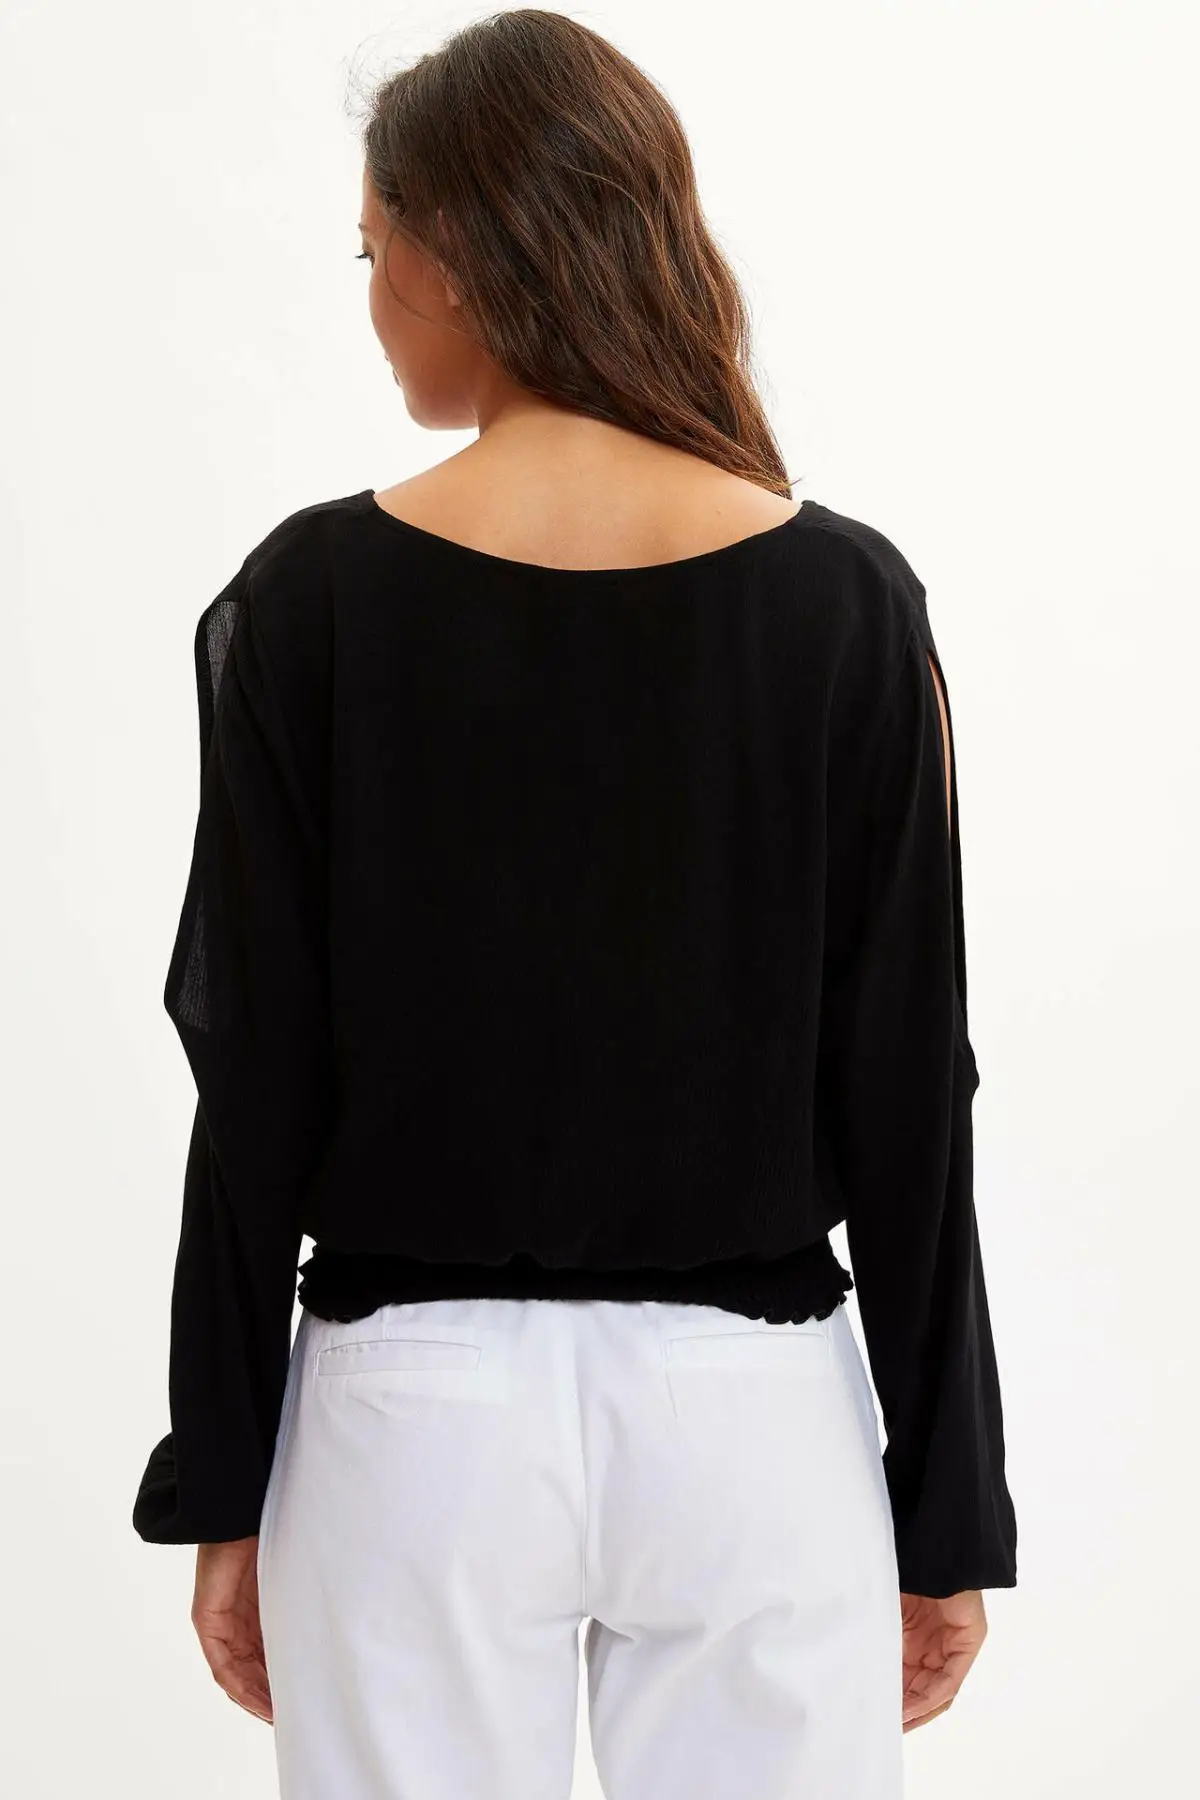  DeFacto Fashion Woman Long Sleeve Blouse Female Casual V-neck Tops Ladies Elegant Shirts Black Simp